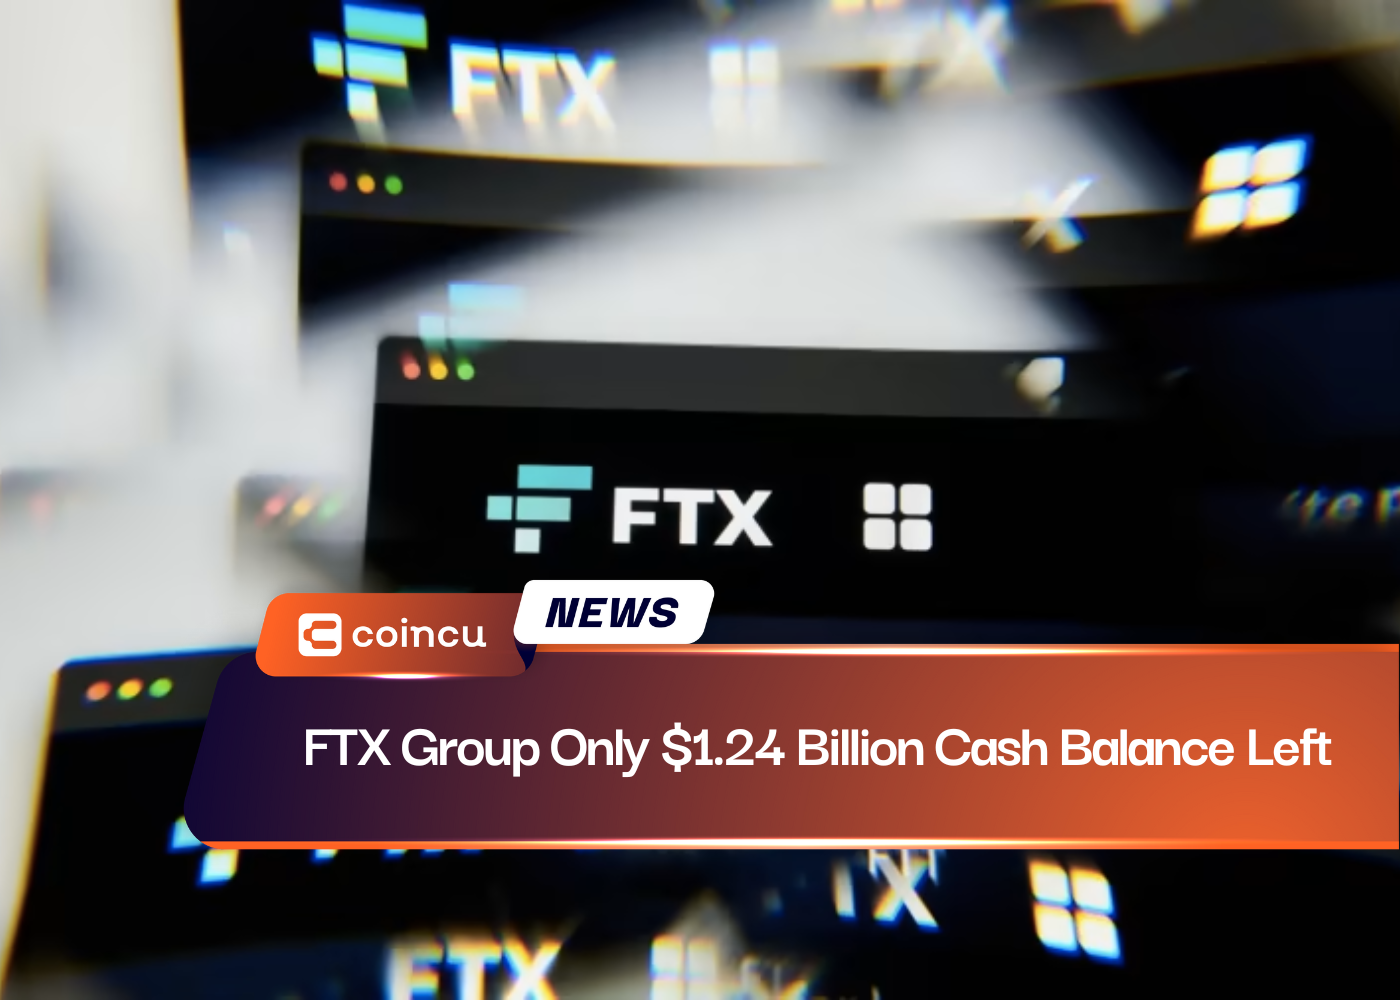 FTX Group Only $1.24 Billion Cash Balance Left